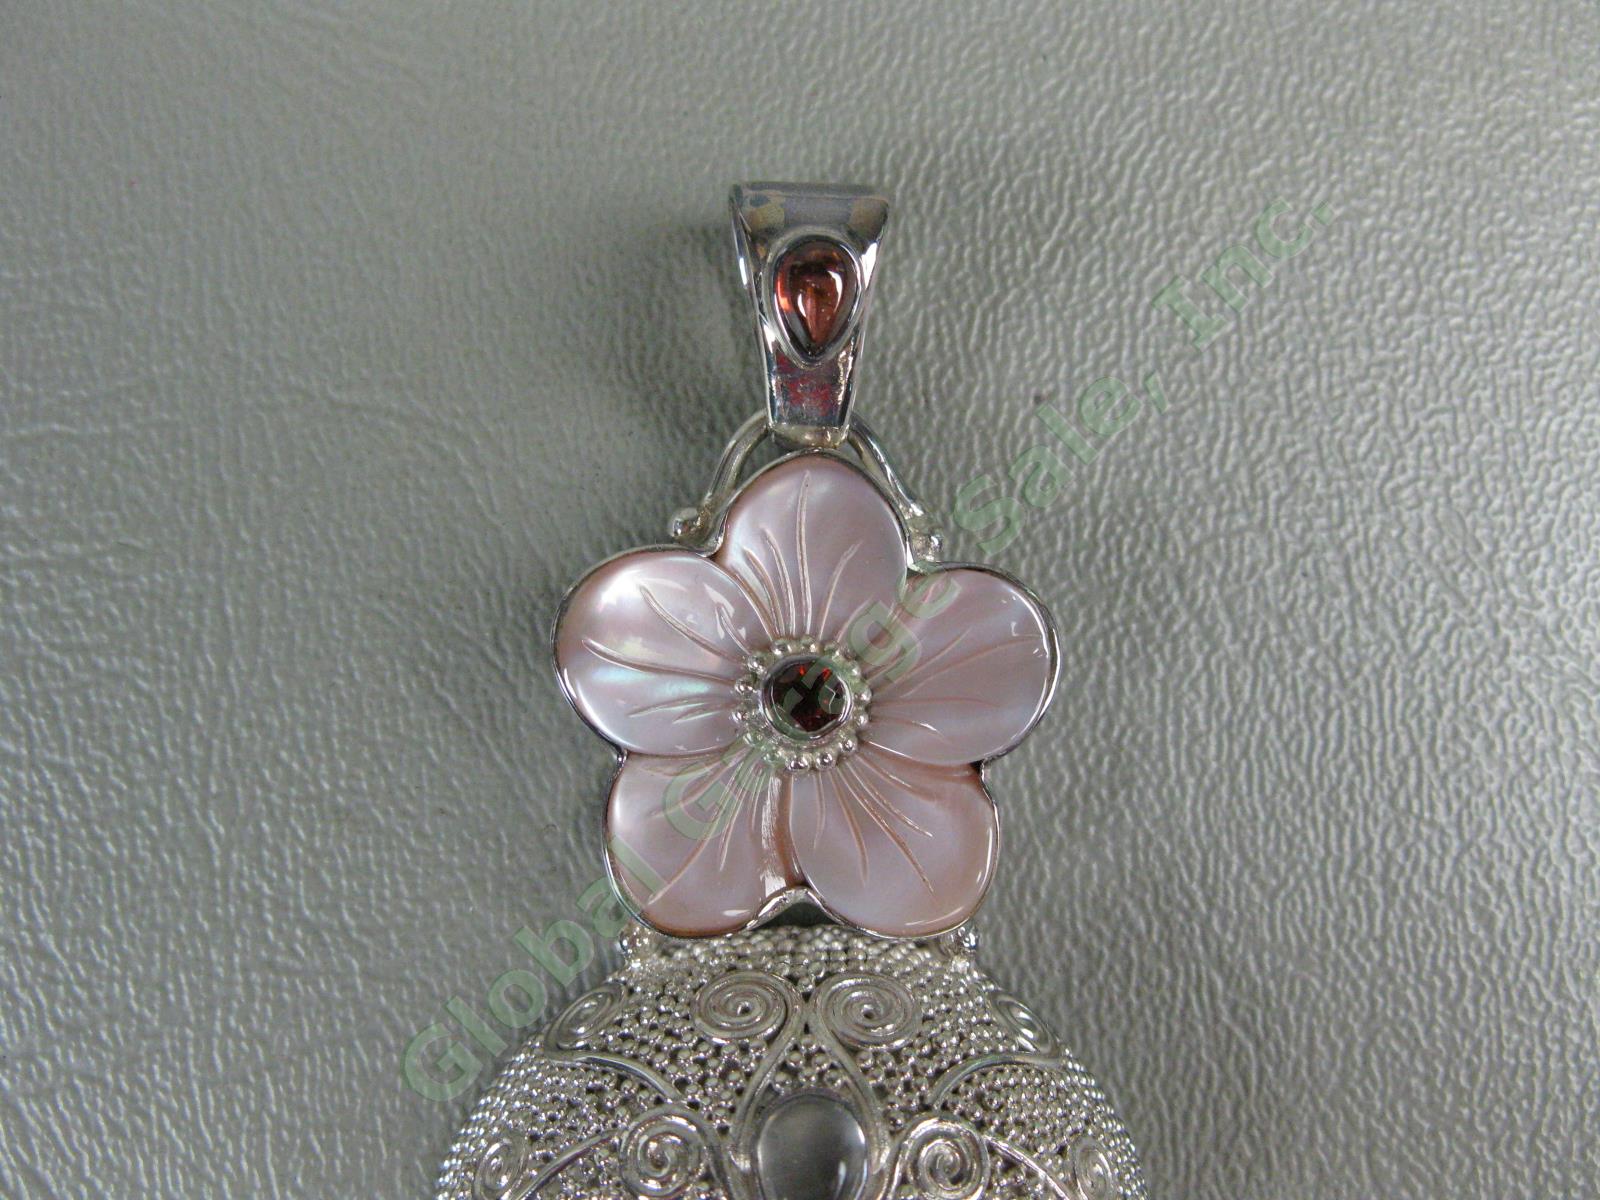 NEW Sajen Goddess Pendant Necklace Large Gemstone Agate MOP Sterling Silver NR! 2